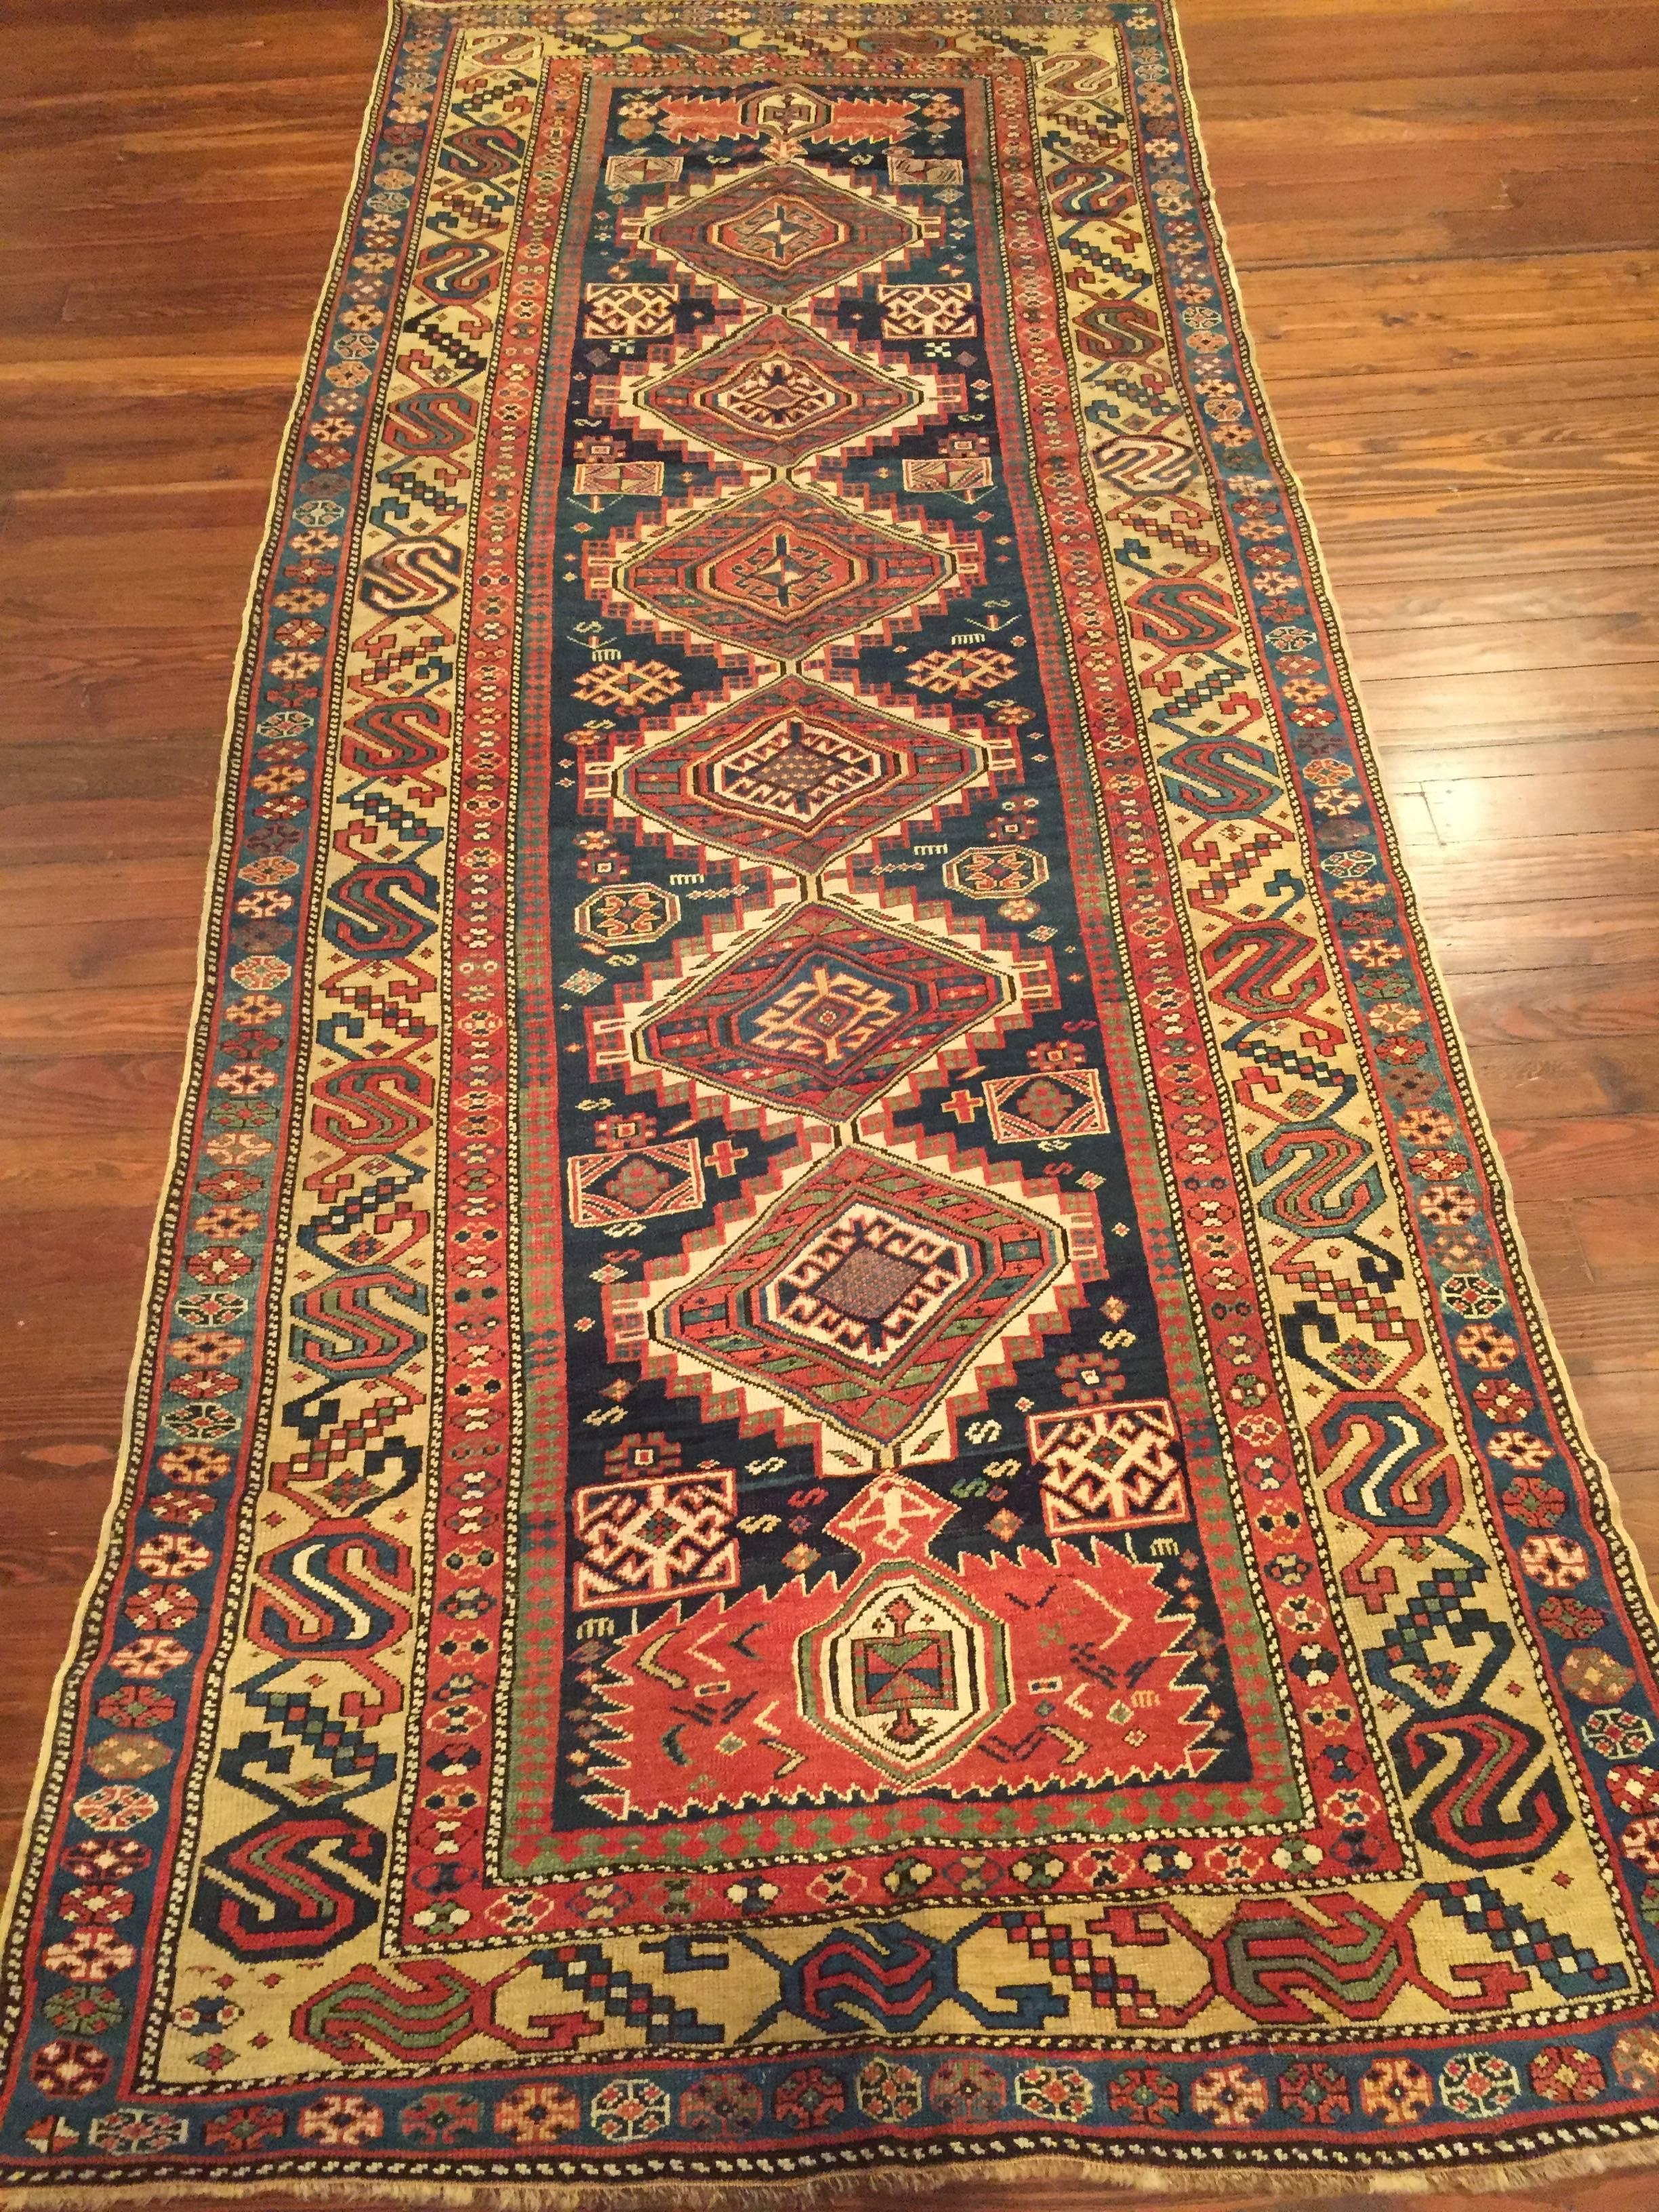 An antique Caucasian Karagashli rug, circa 1880.